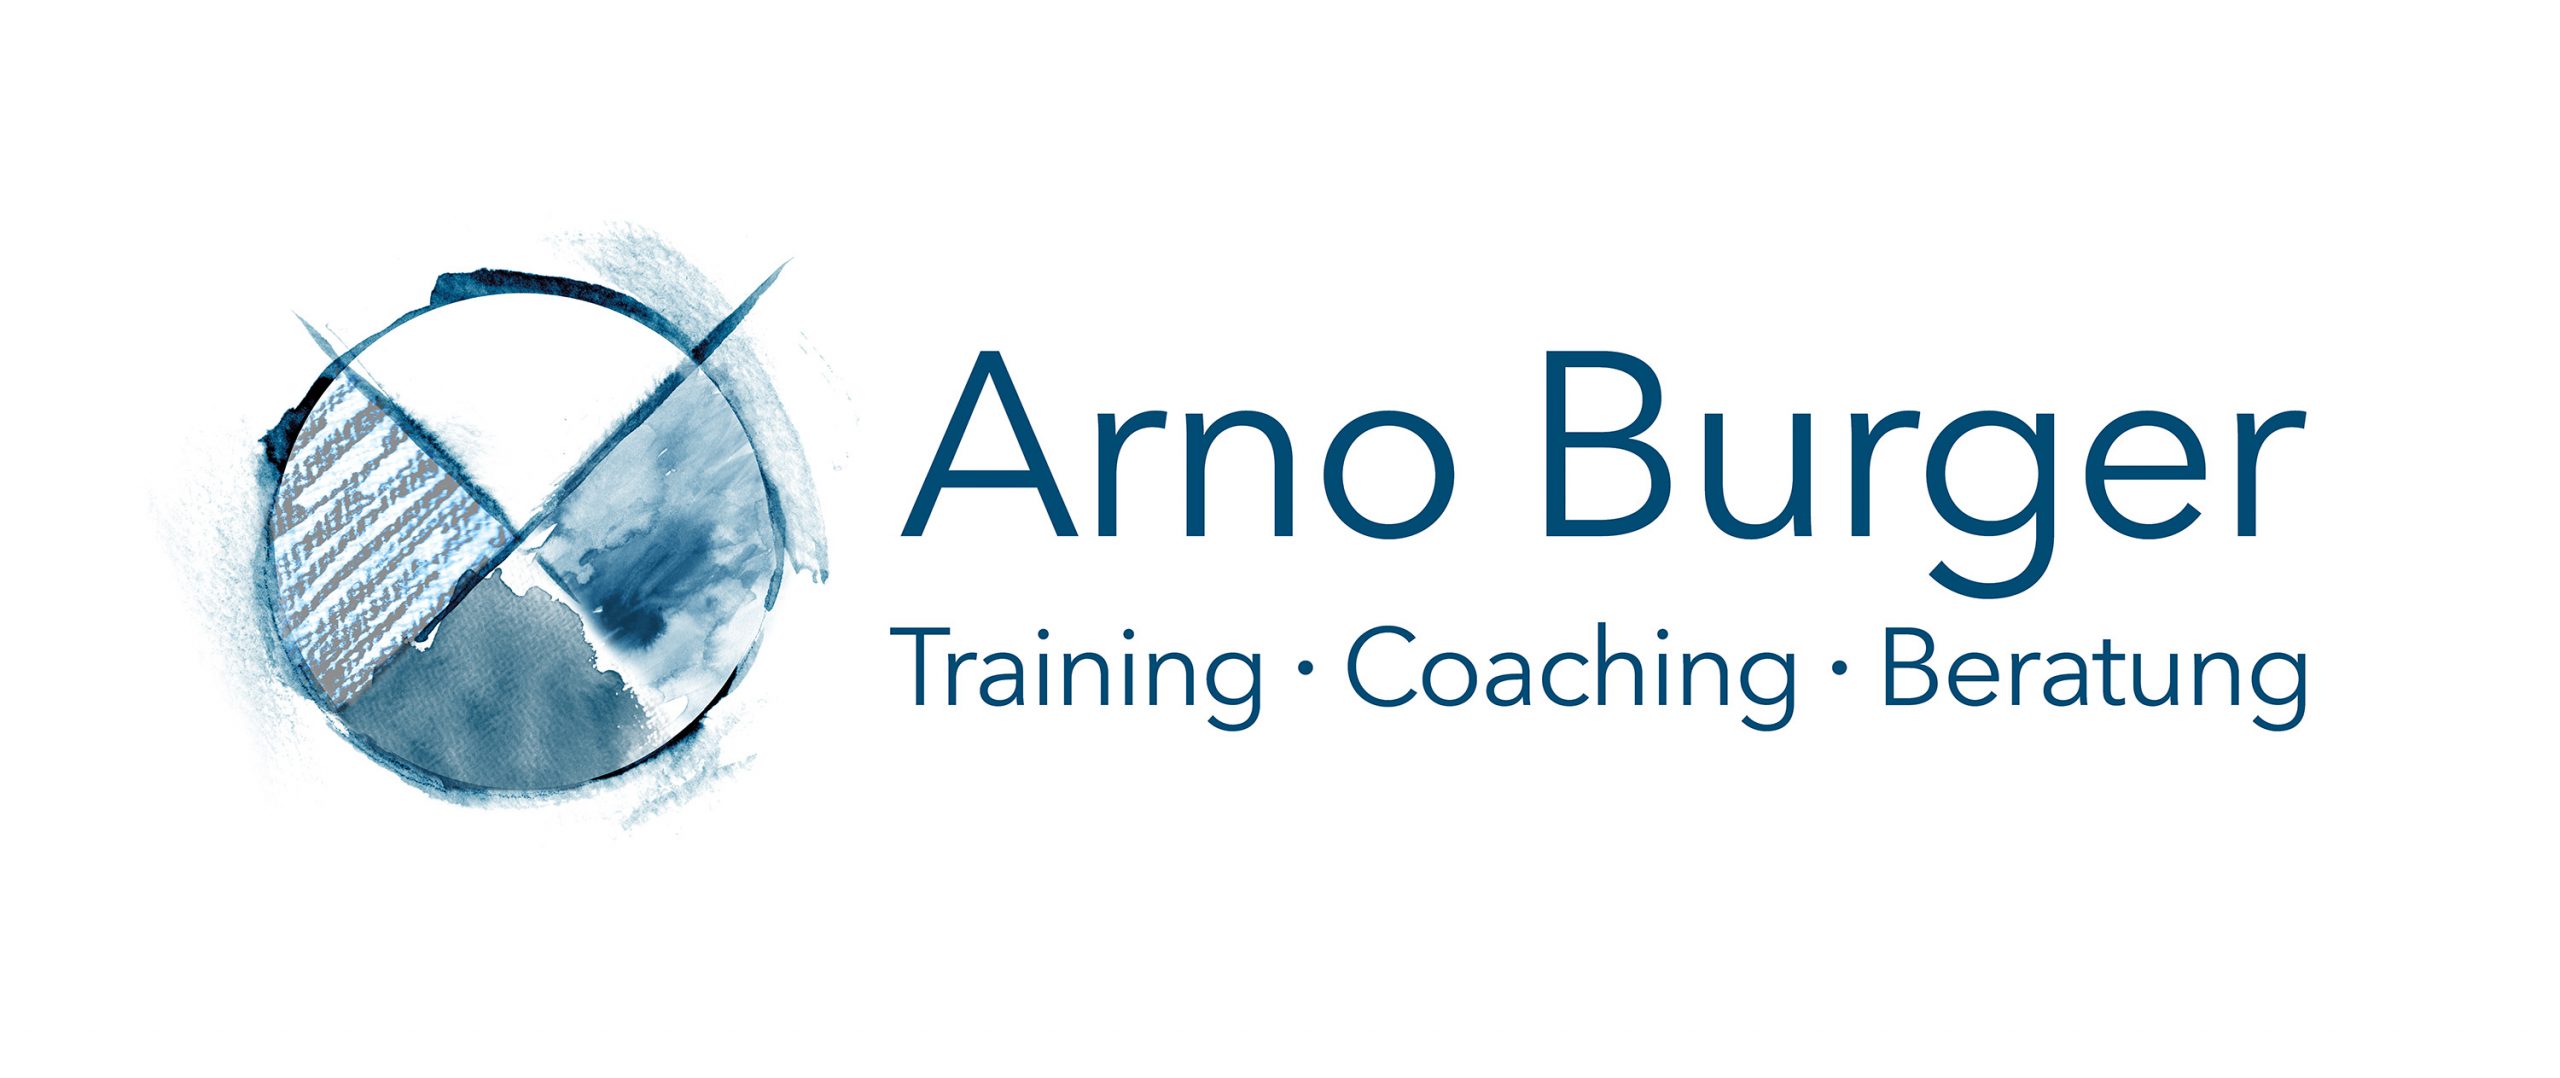 Arno Burger - Training . Coaching . Beratung